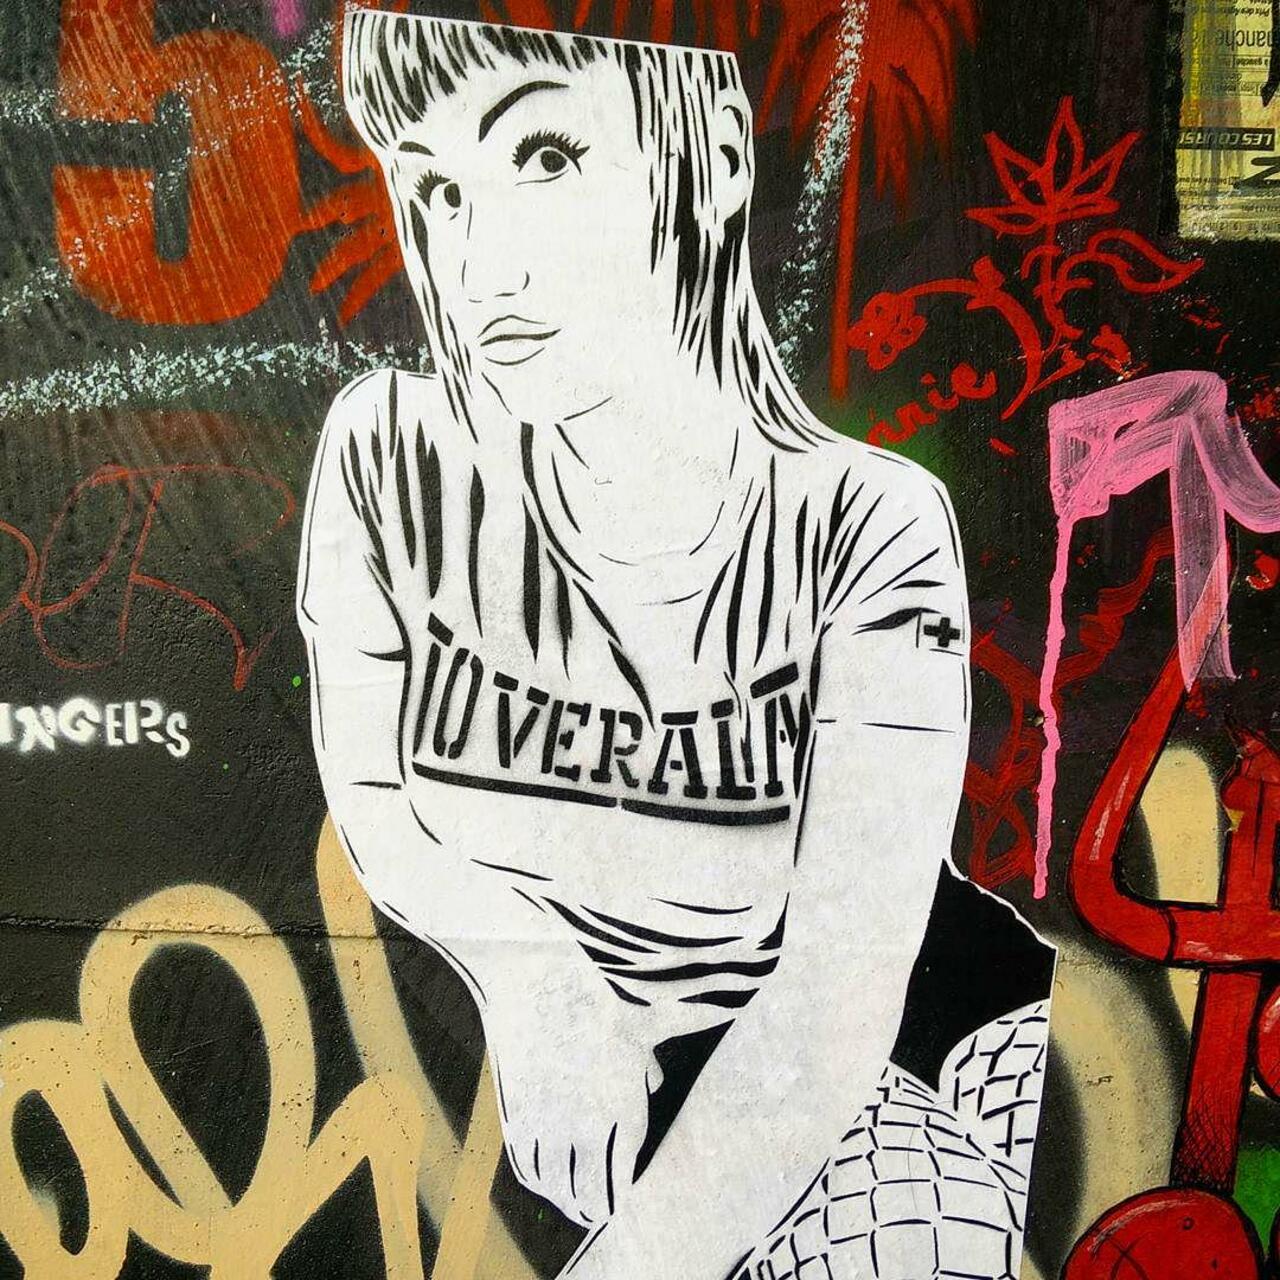 #Paris #graffiti photo by @ceky_art http://ift.tt/1VVc9pr #StreetArt http://t.co/sINrUiQBoP